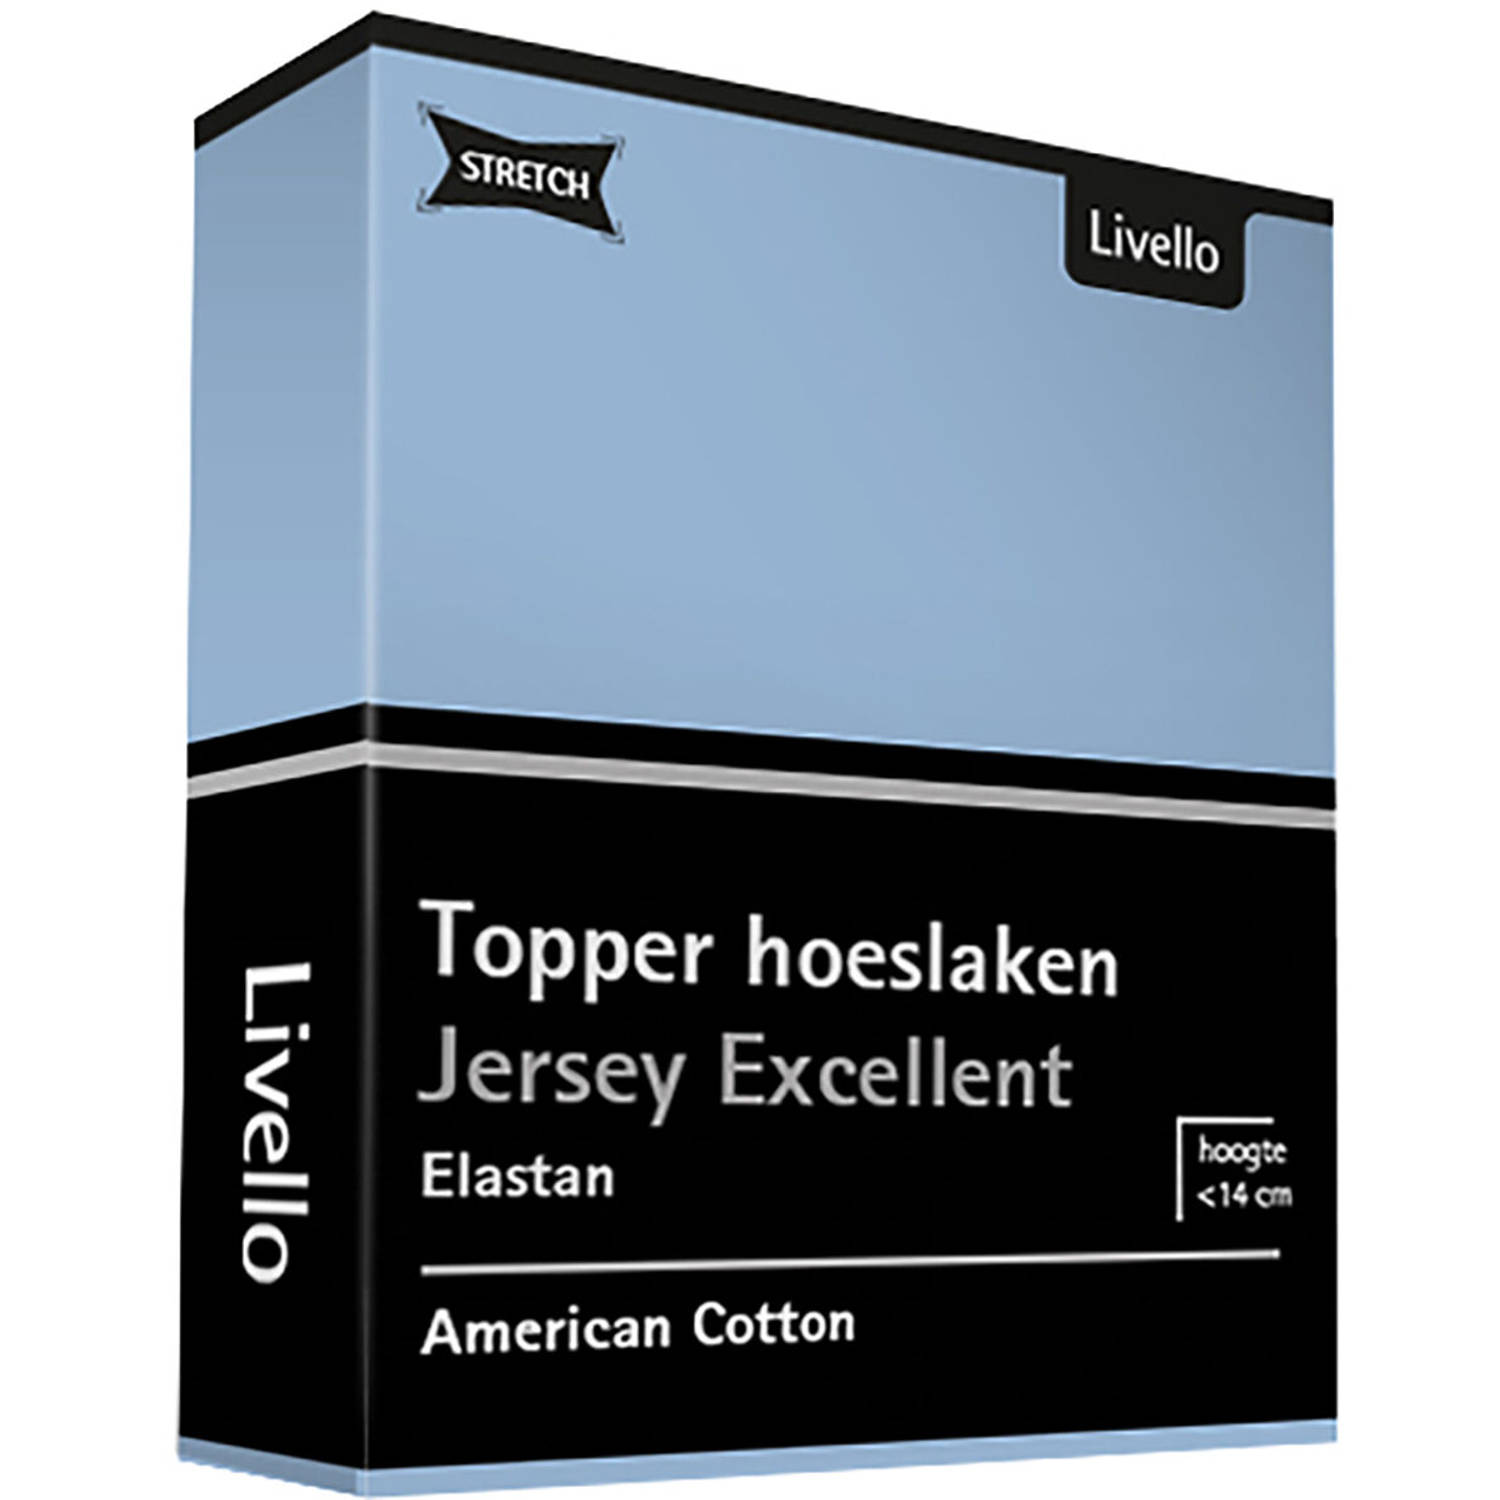 Livello Hoeslaken Topper Jersey Excellent - 80/100 x 200/220